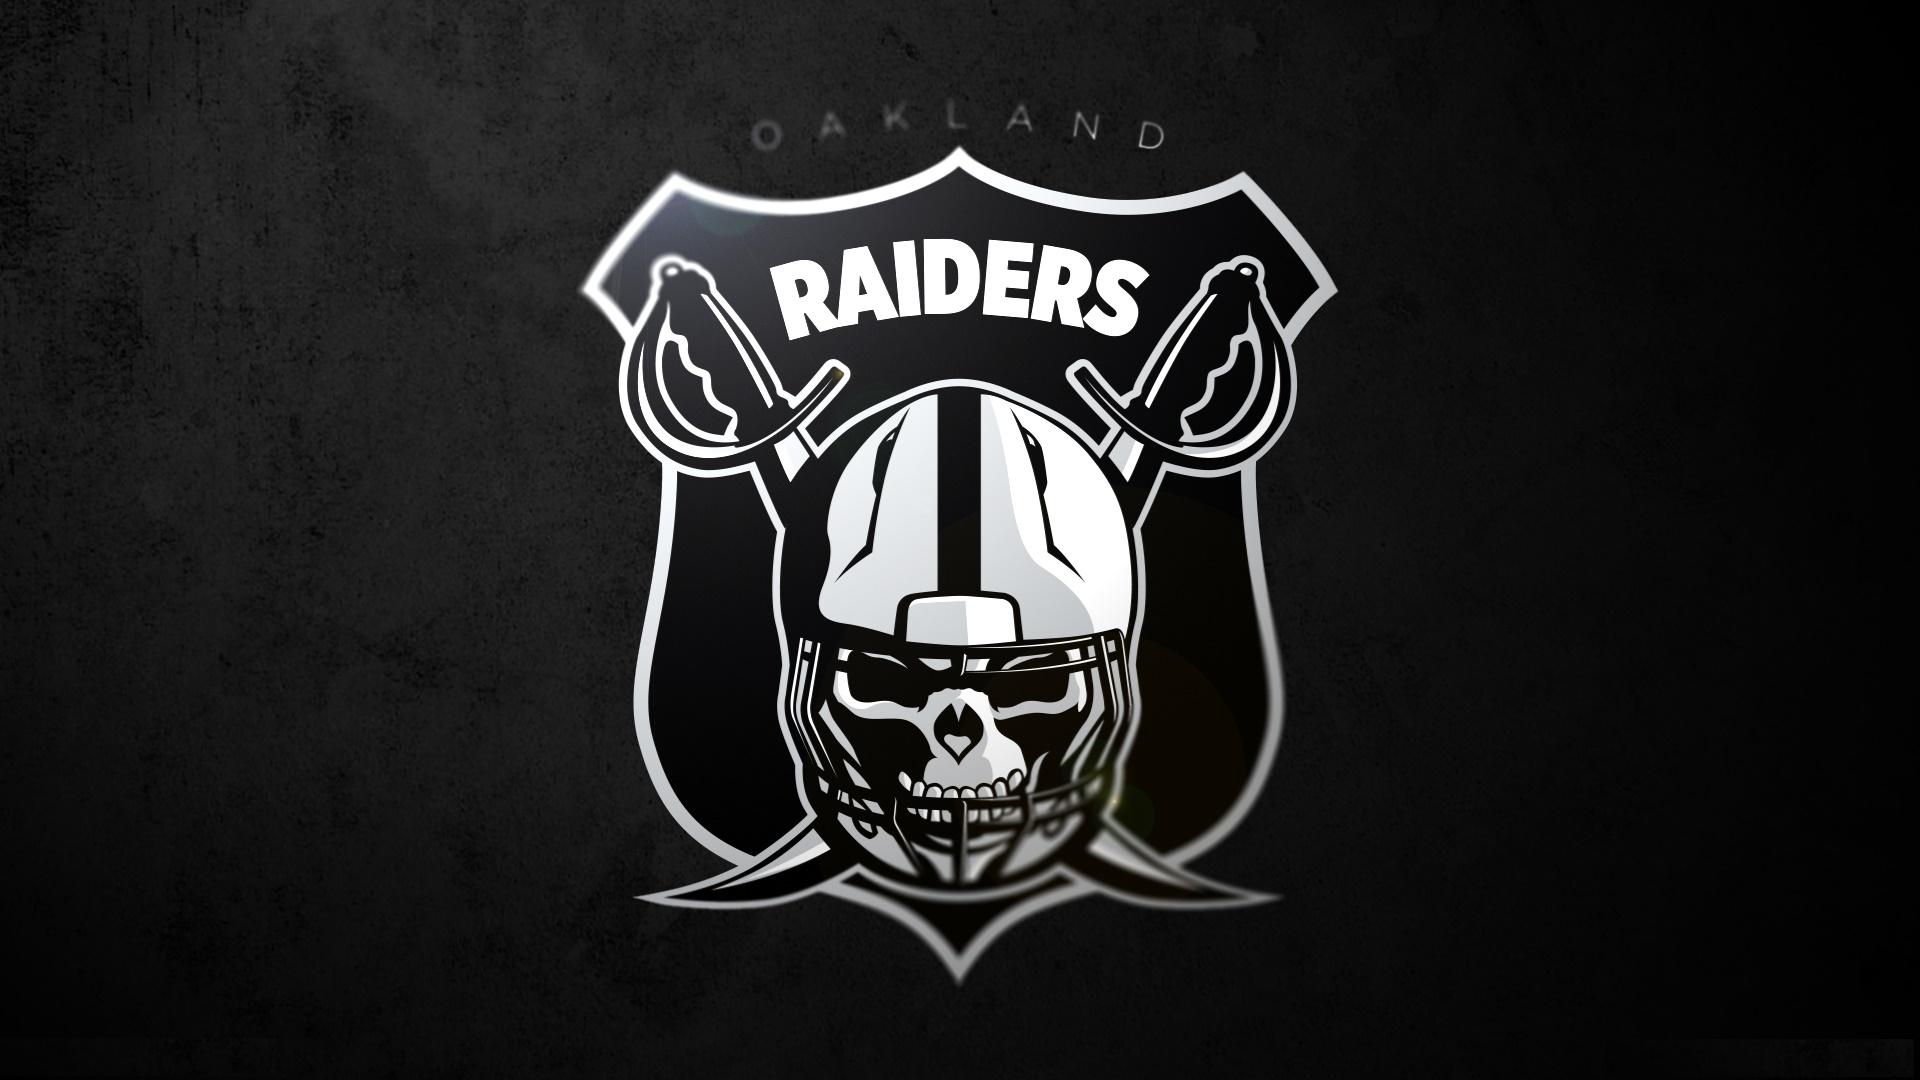 Oakland Raiders Wallpaper. Oakland